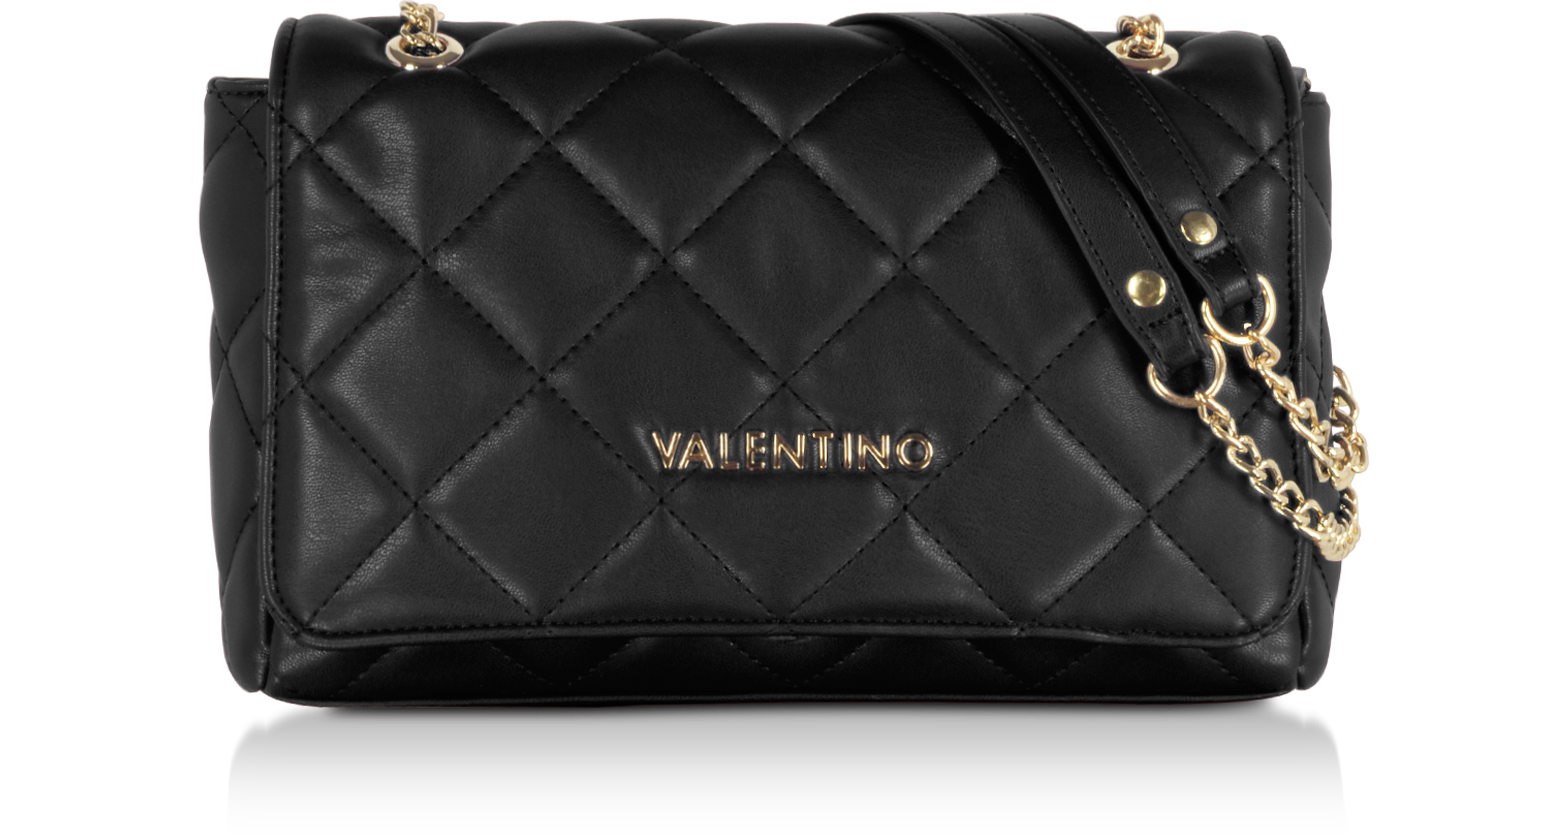 Valentino by Mario Valentino Black Ocarina Shoulder Bag at FORZIERI